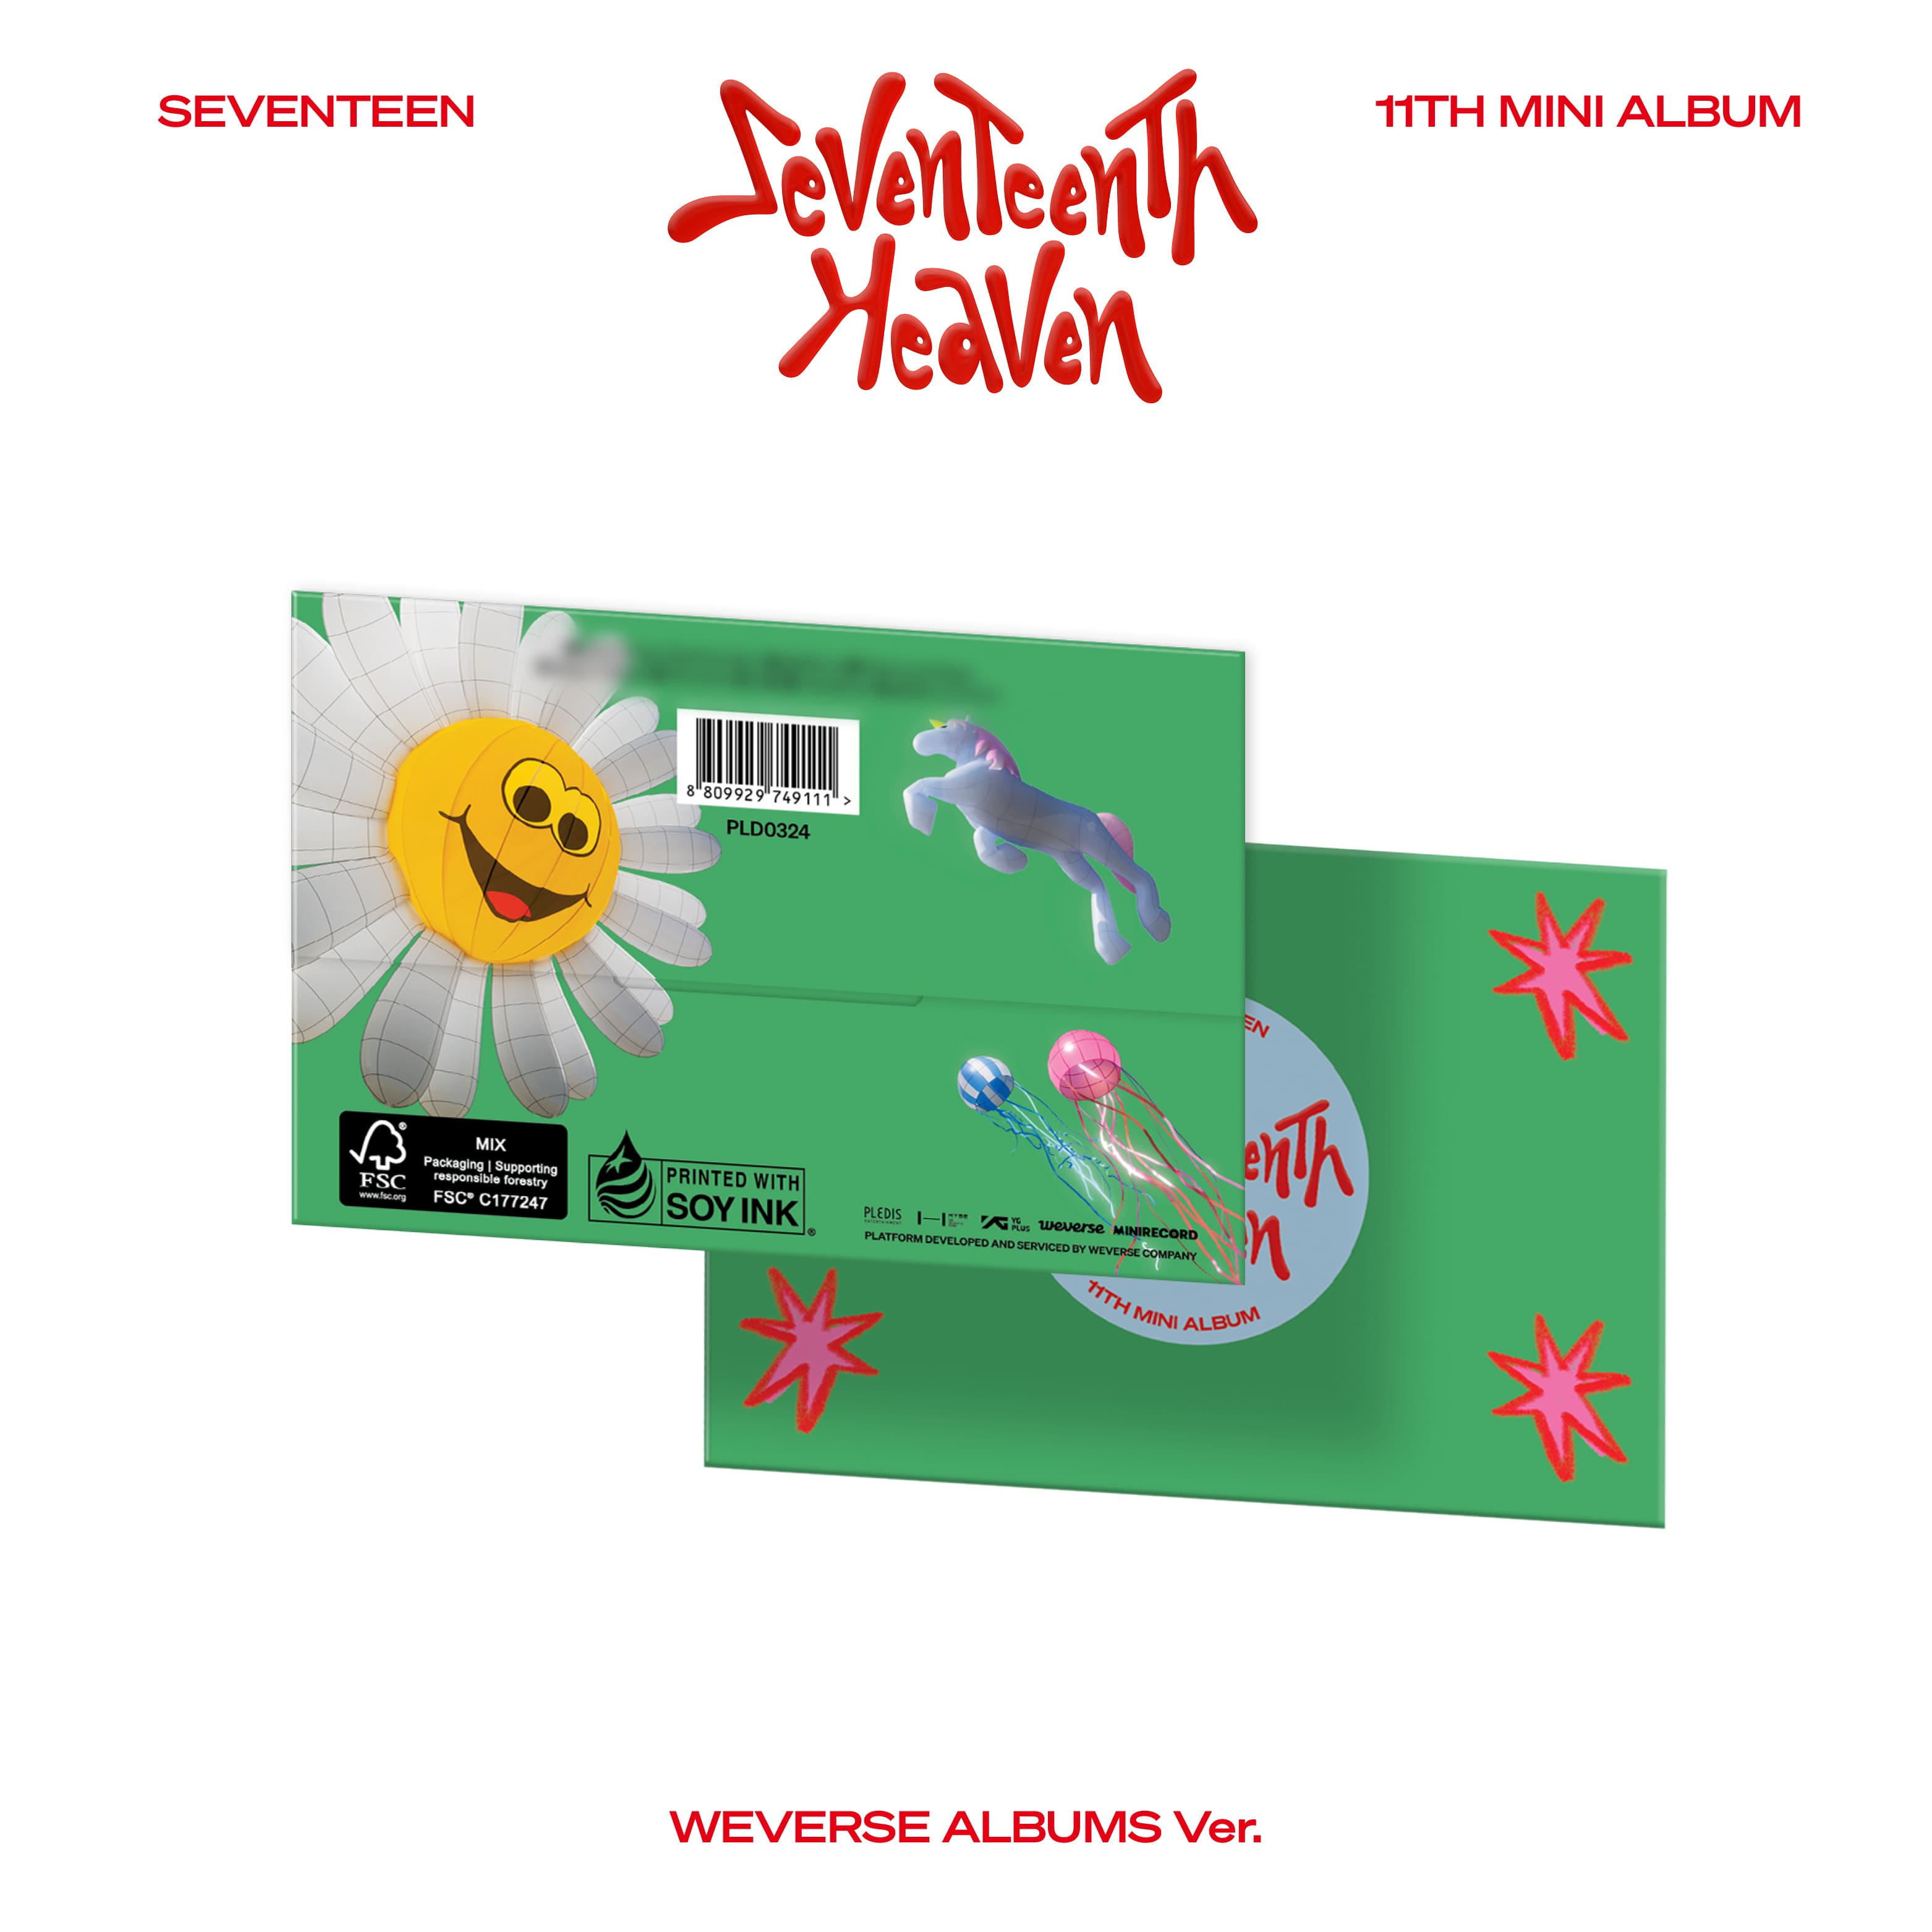 SEVENTEEN 11th Mini Album SEVENTEENTH HEAVEN (Weverse Albums Version)